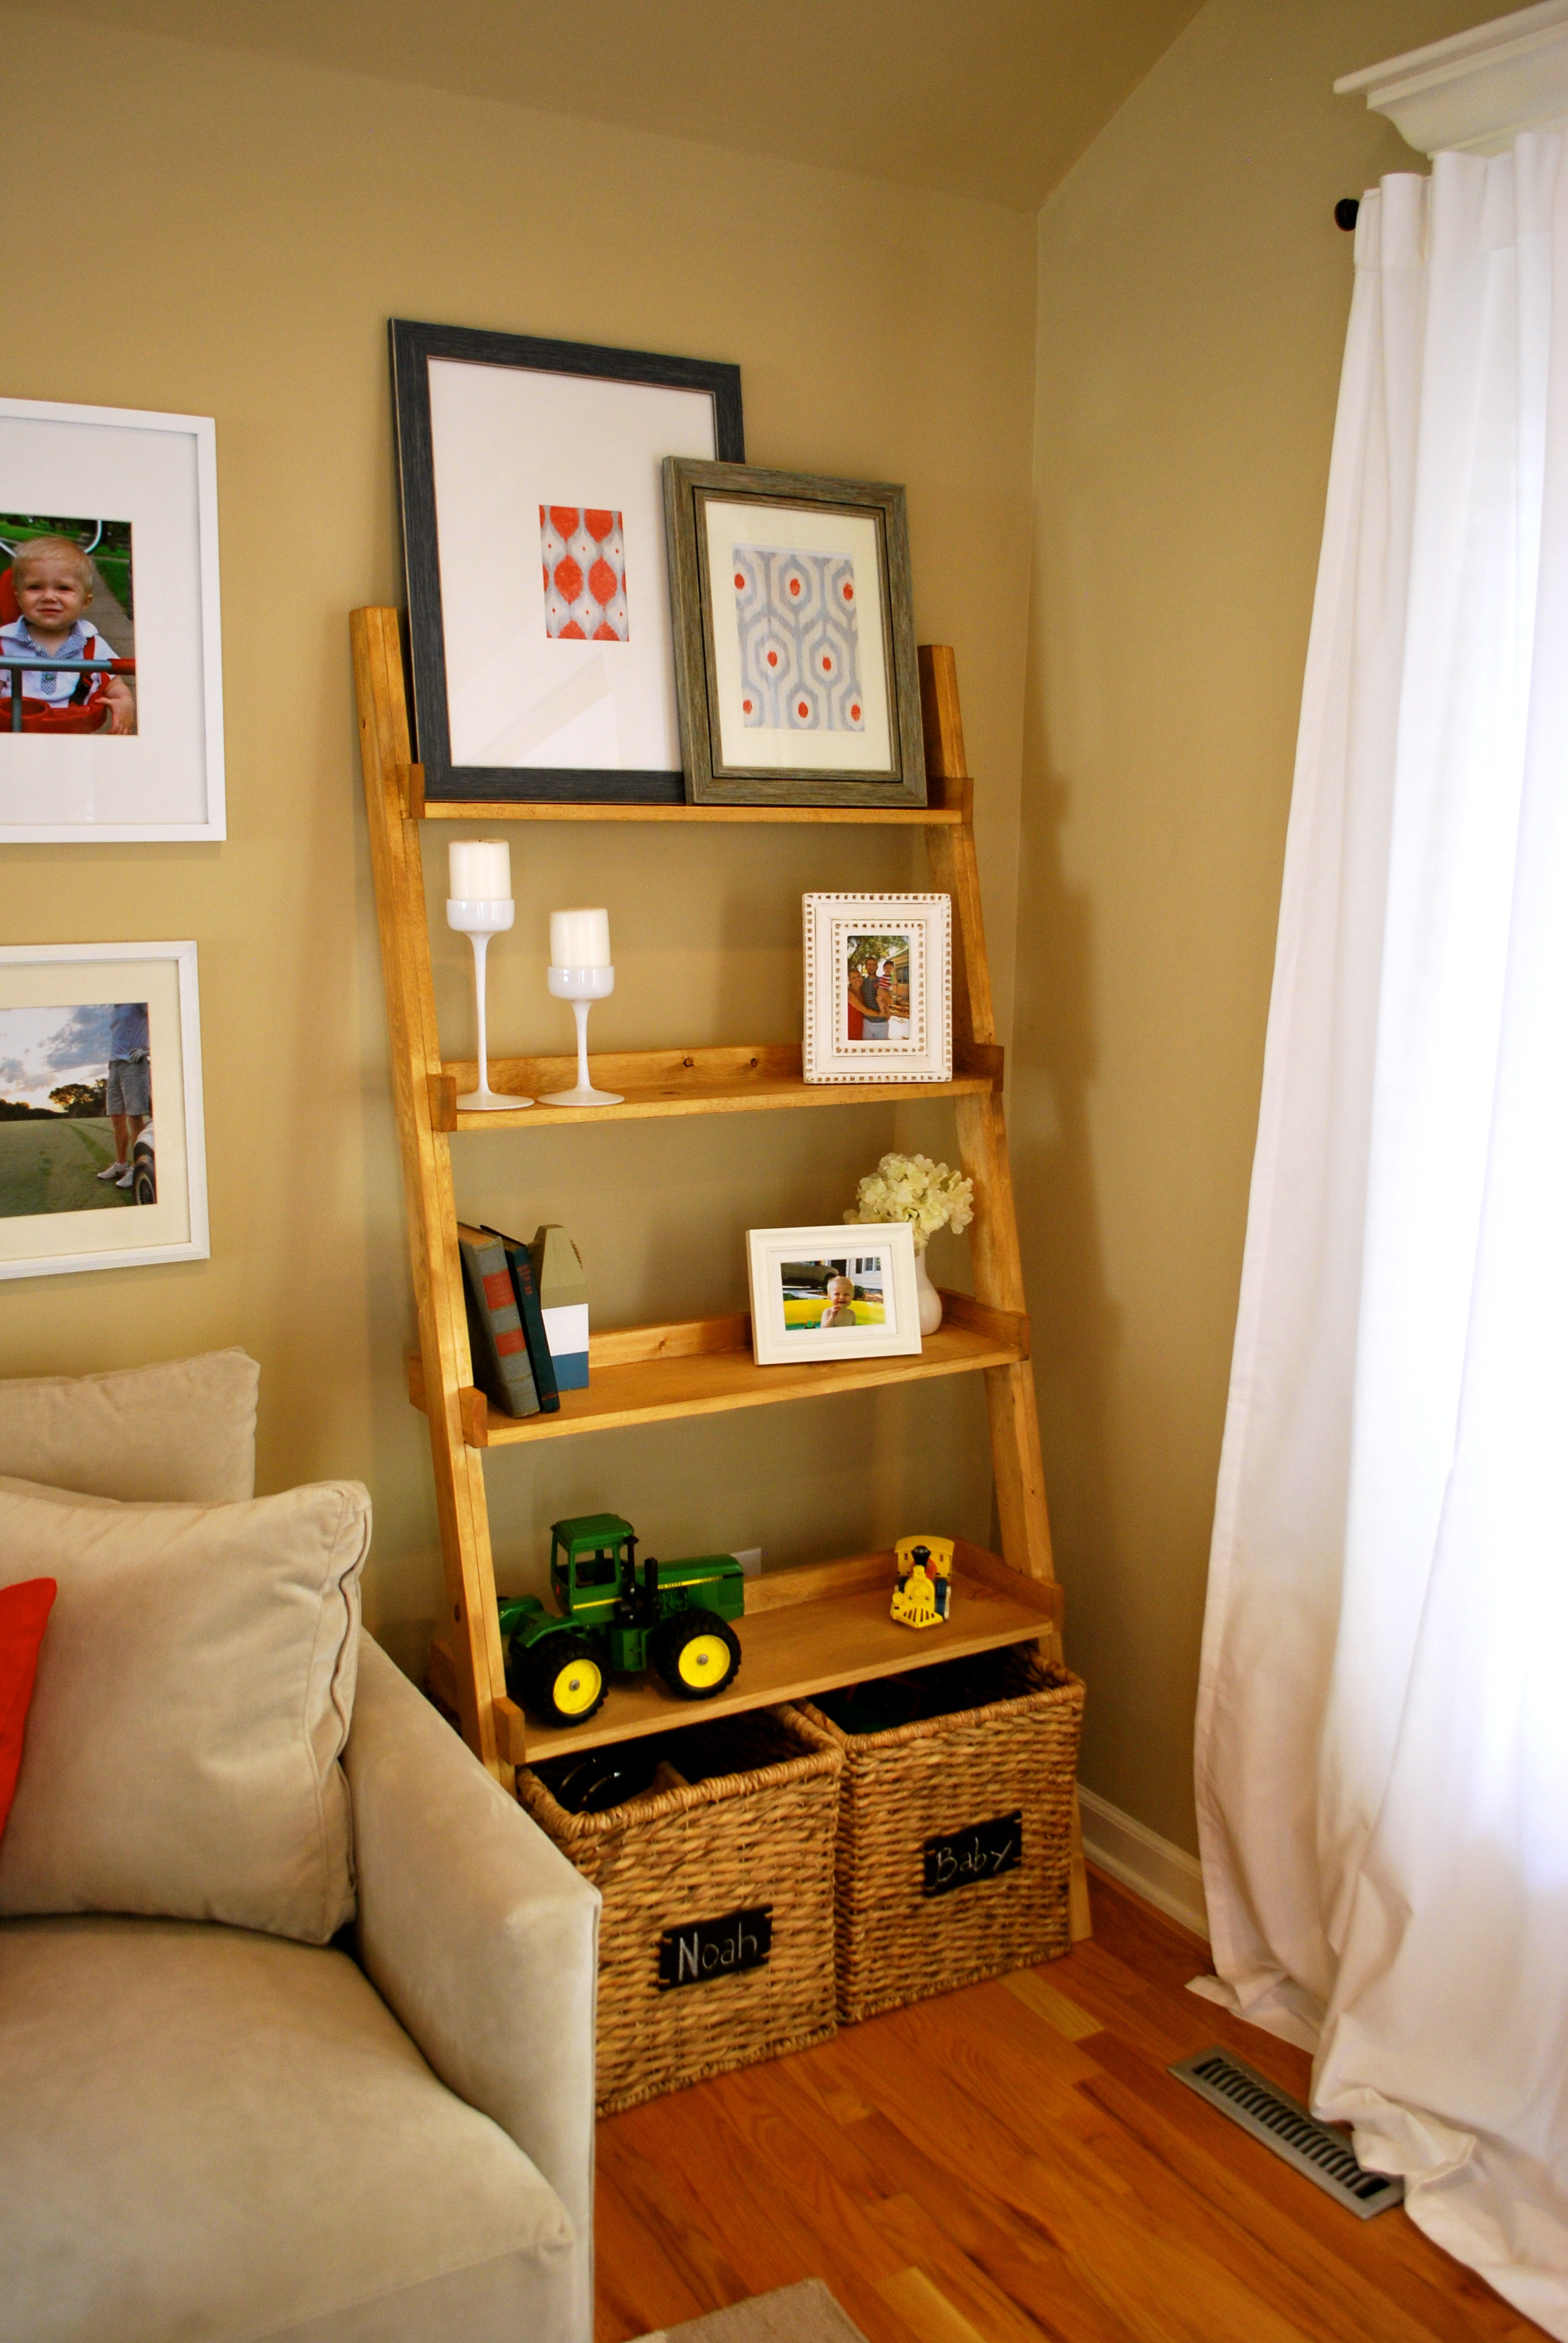 Best ideas about DIY Shelf Ideas
. Save or Pin DIY Ladder Bookshelf An Easy Weekend Project Now.